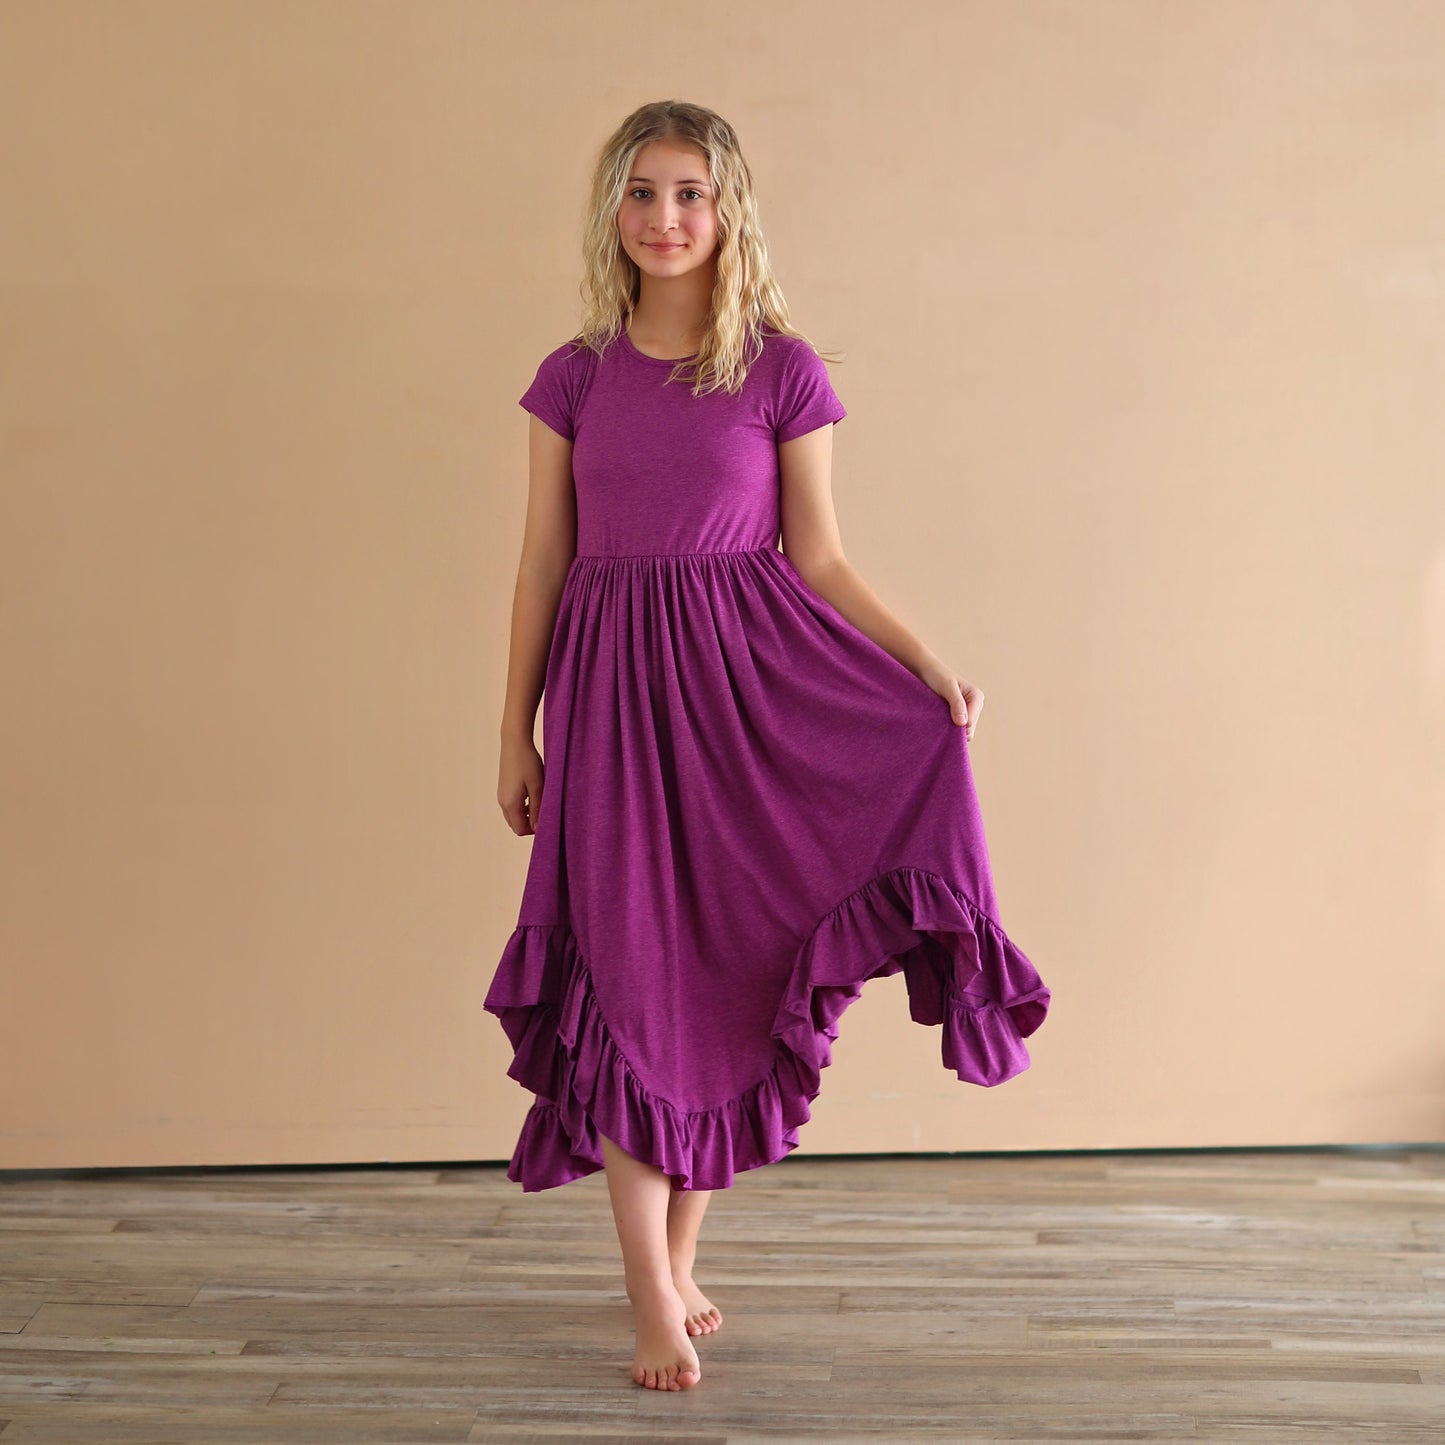 Plum Boho Dress - Long Ruffle Dress - High-low Hem Ruffle Dress - Full Skirt Red Dress - Purple Twirly Dress